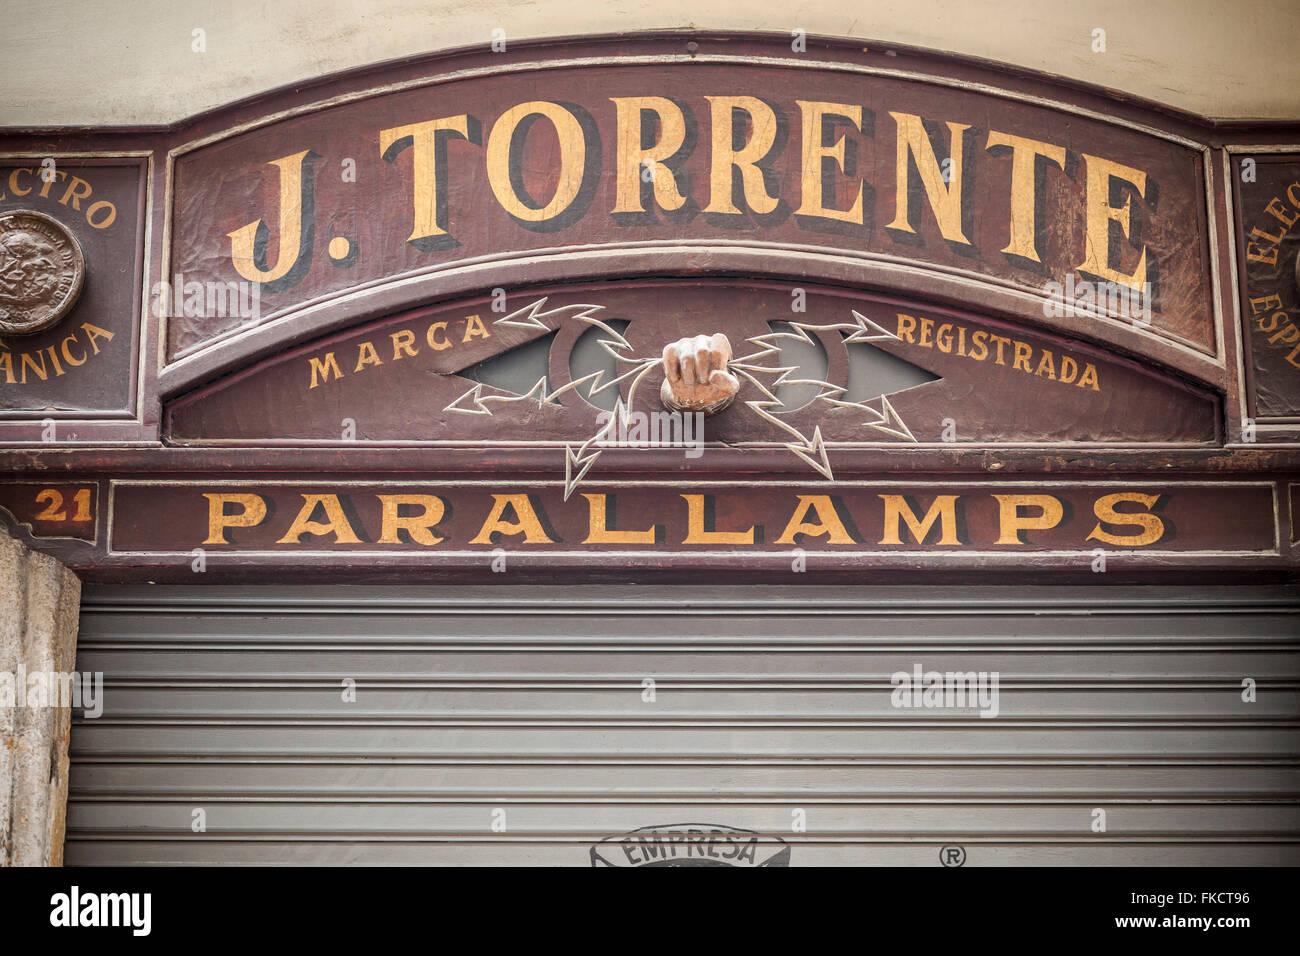 Shop-J. Torrente Parallamps (Parallamps-Blitzableiter), gegründet im Jahre 1860, El Raval, Barcelona. Stockfoto